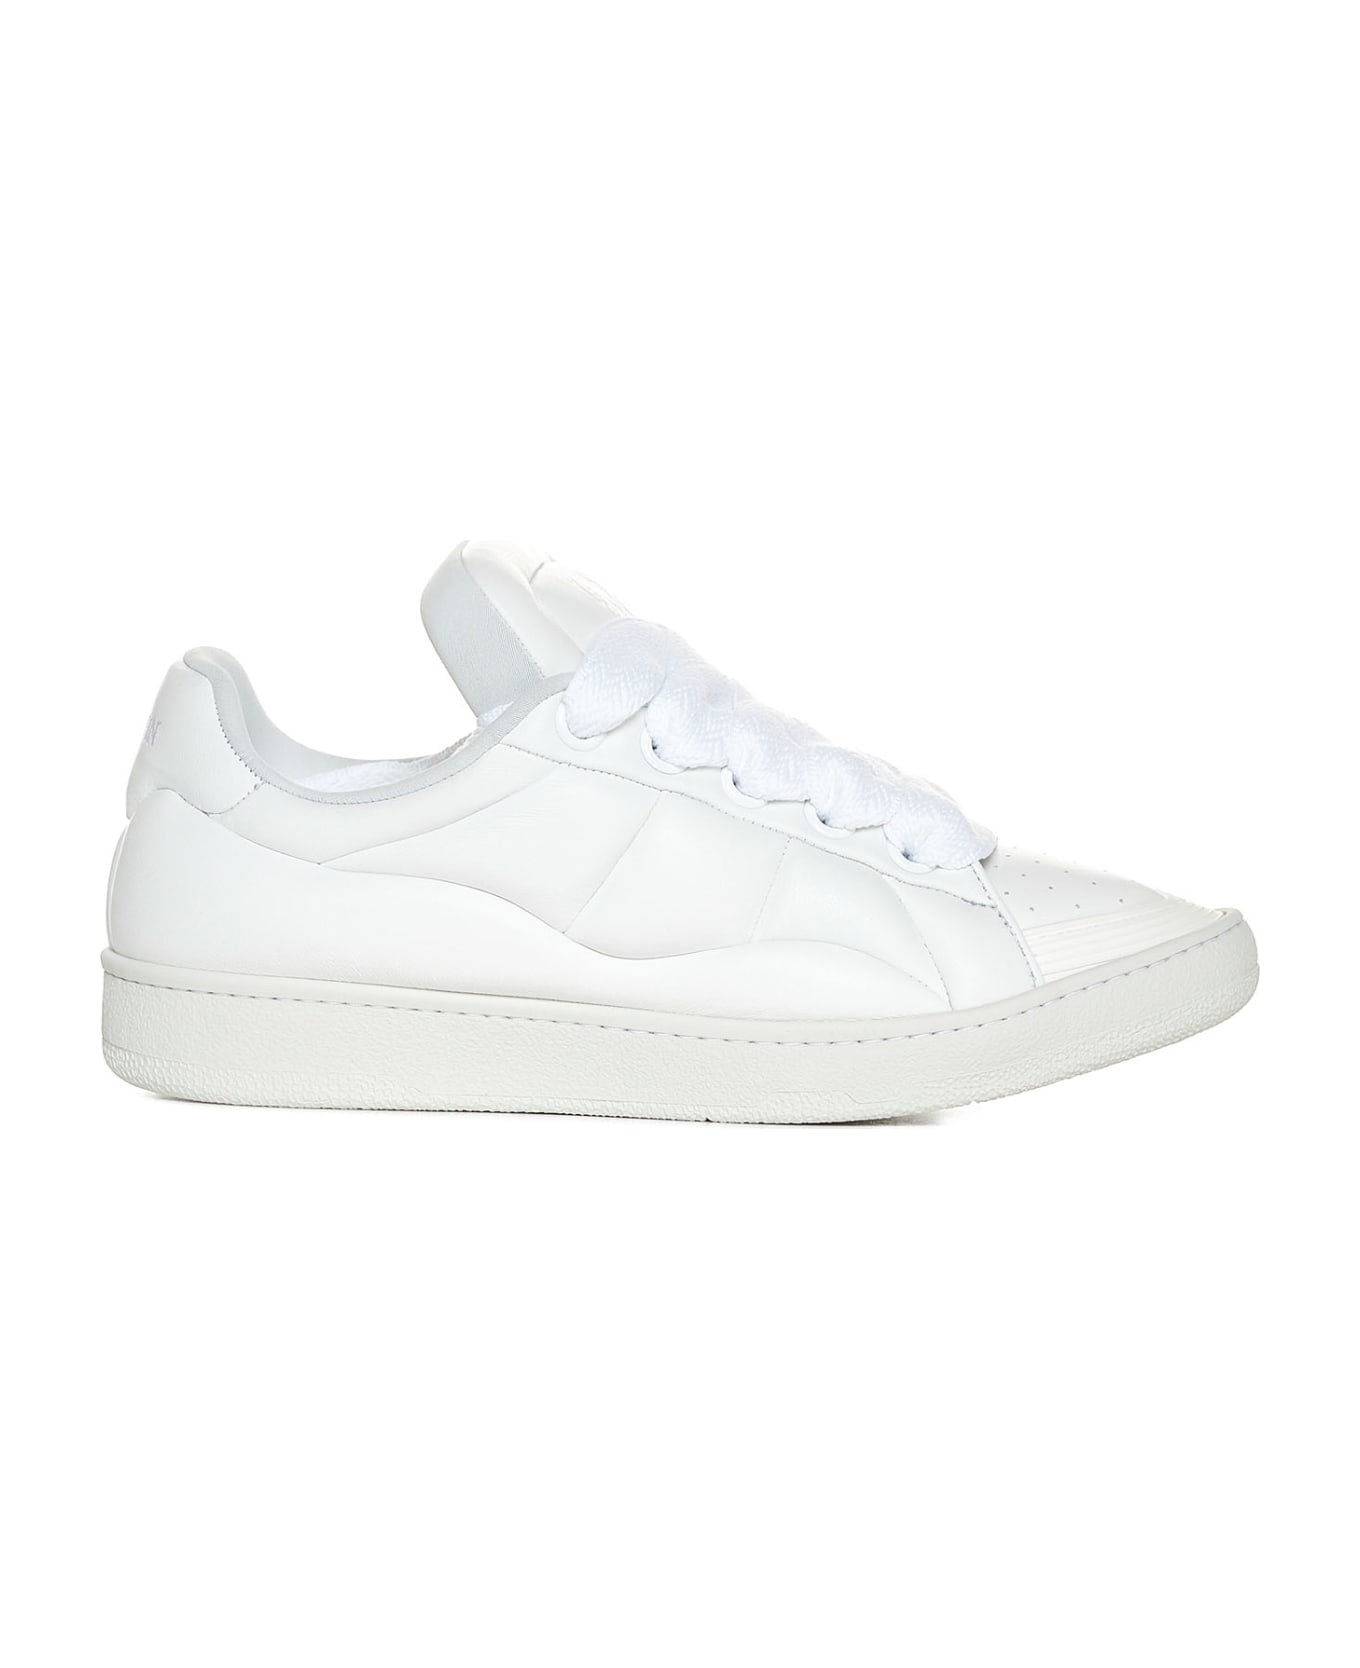 Lanvin Sneakers - White/white